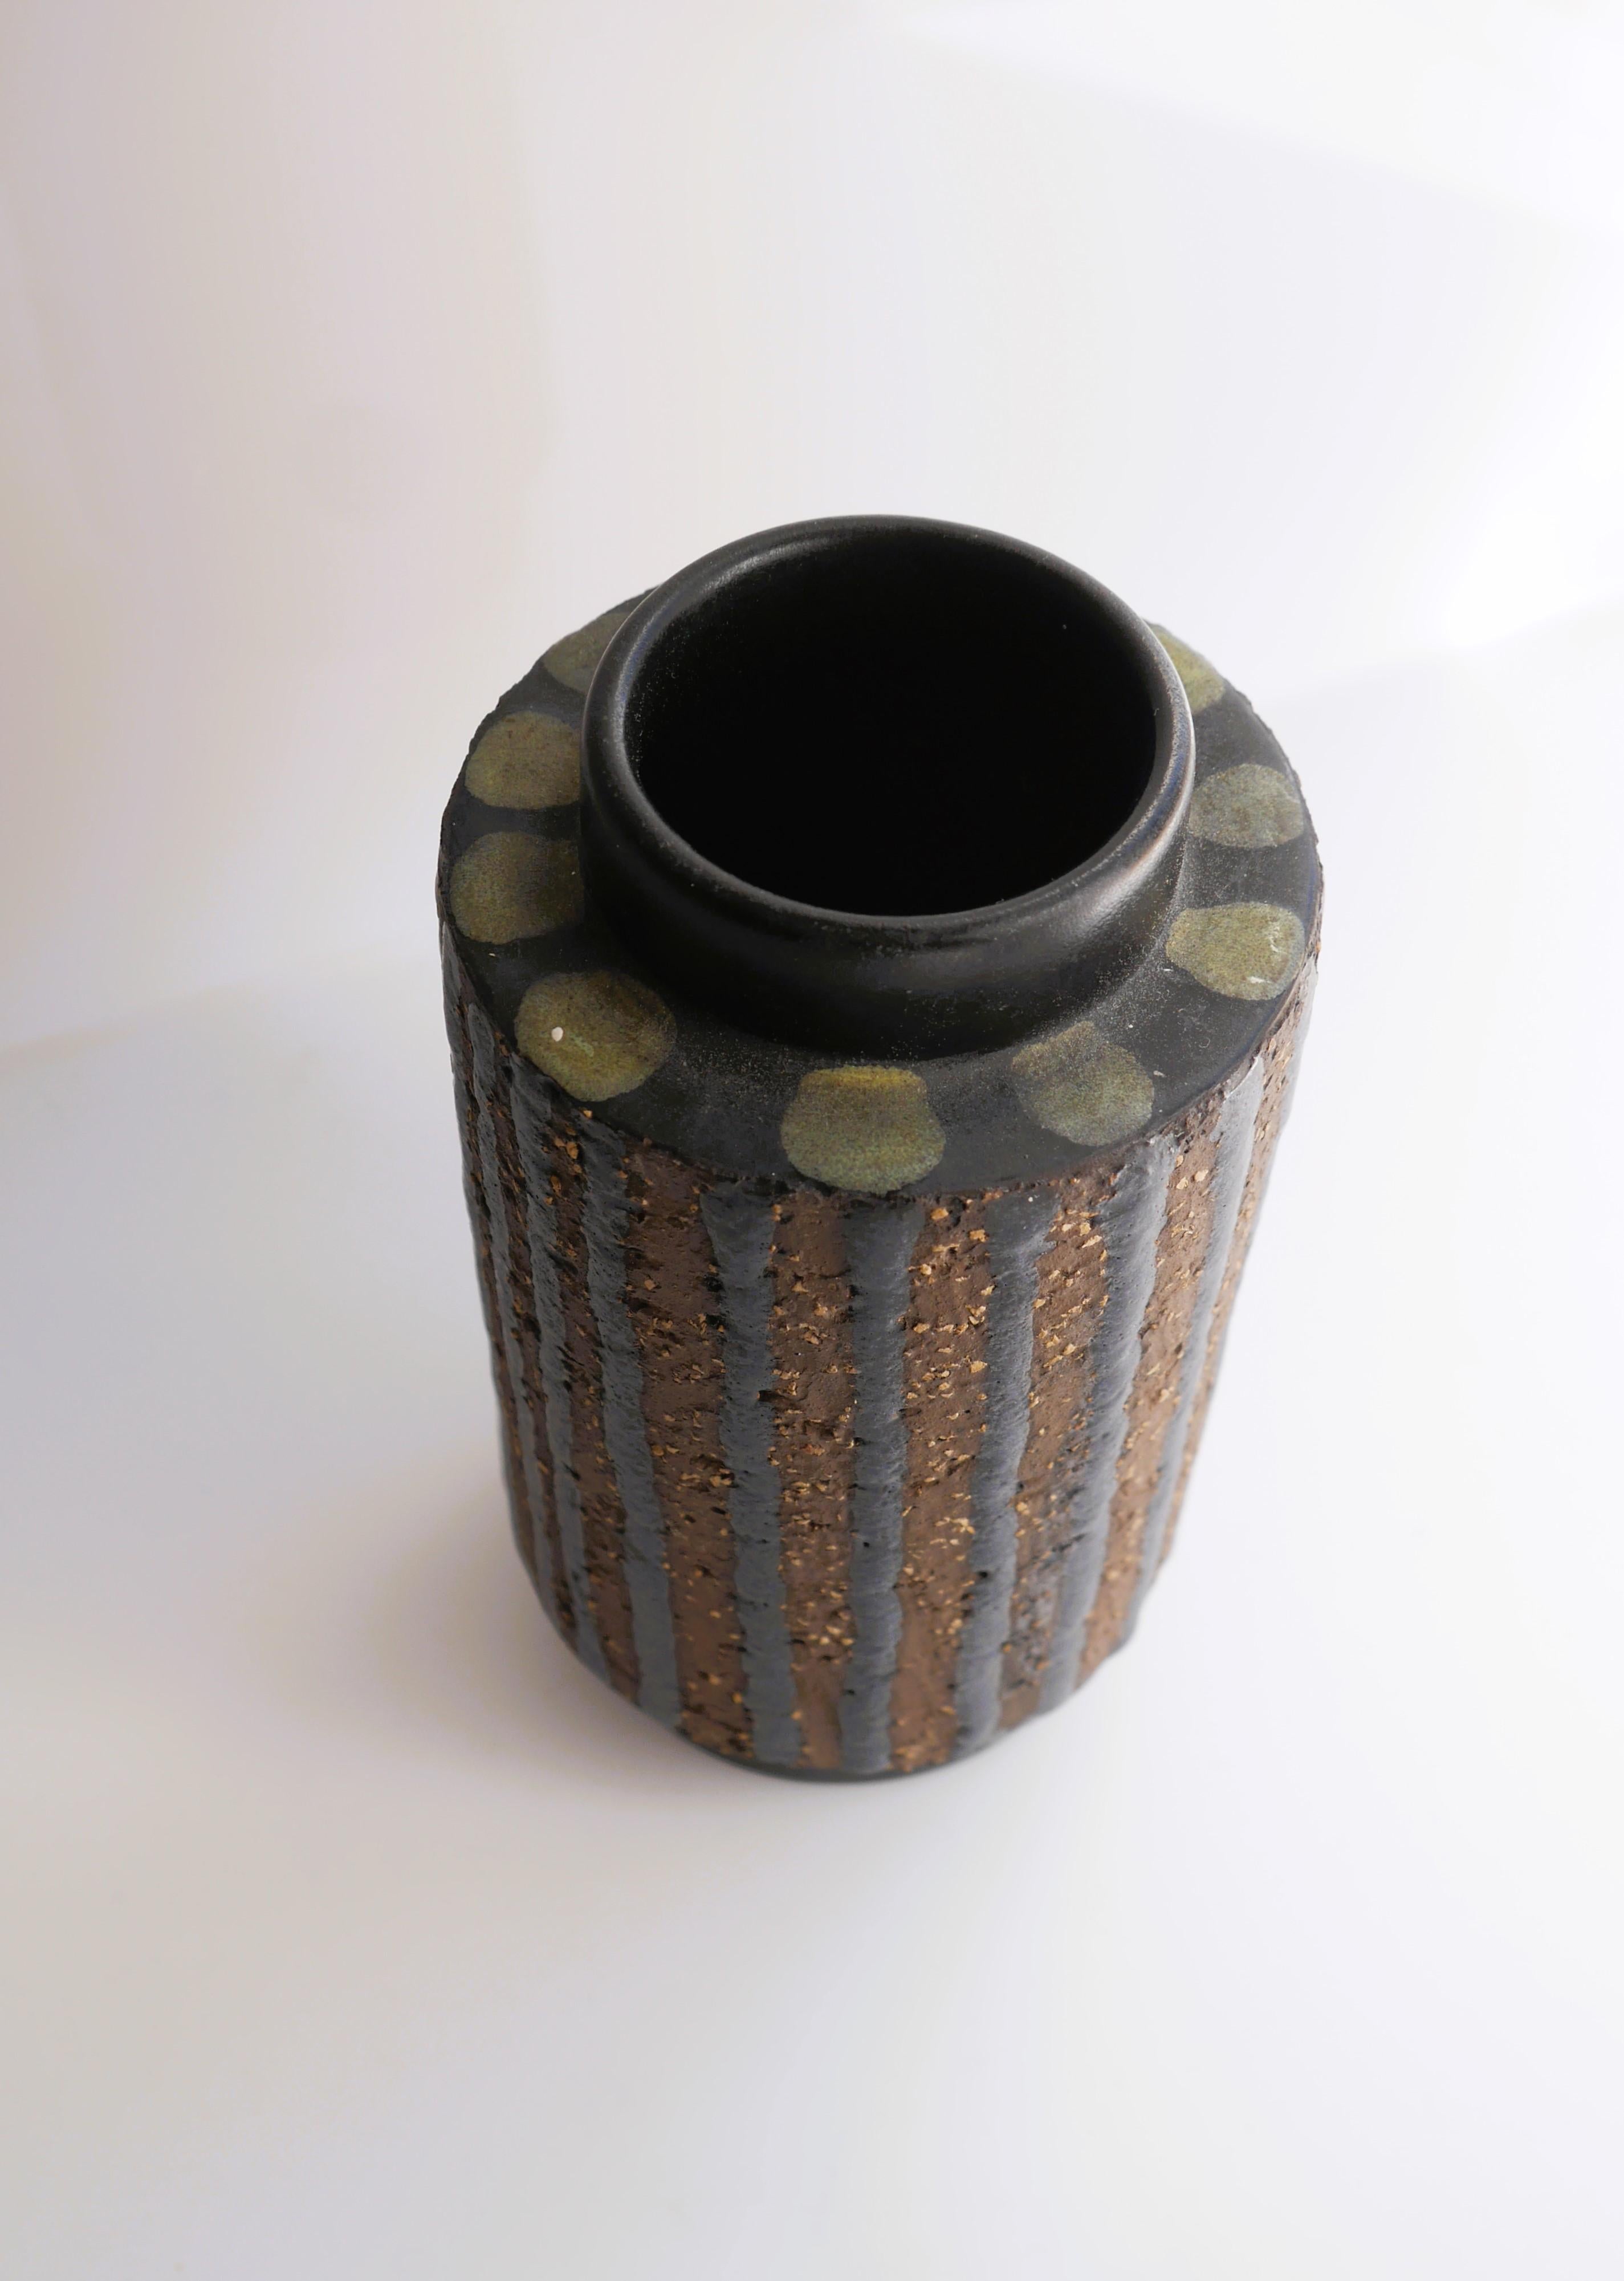 A brutalist mid-century art vase known as 